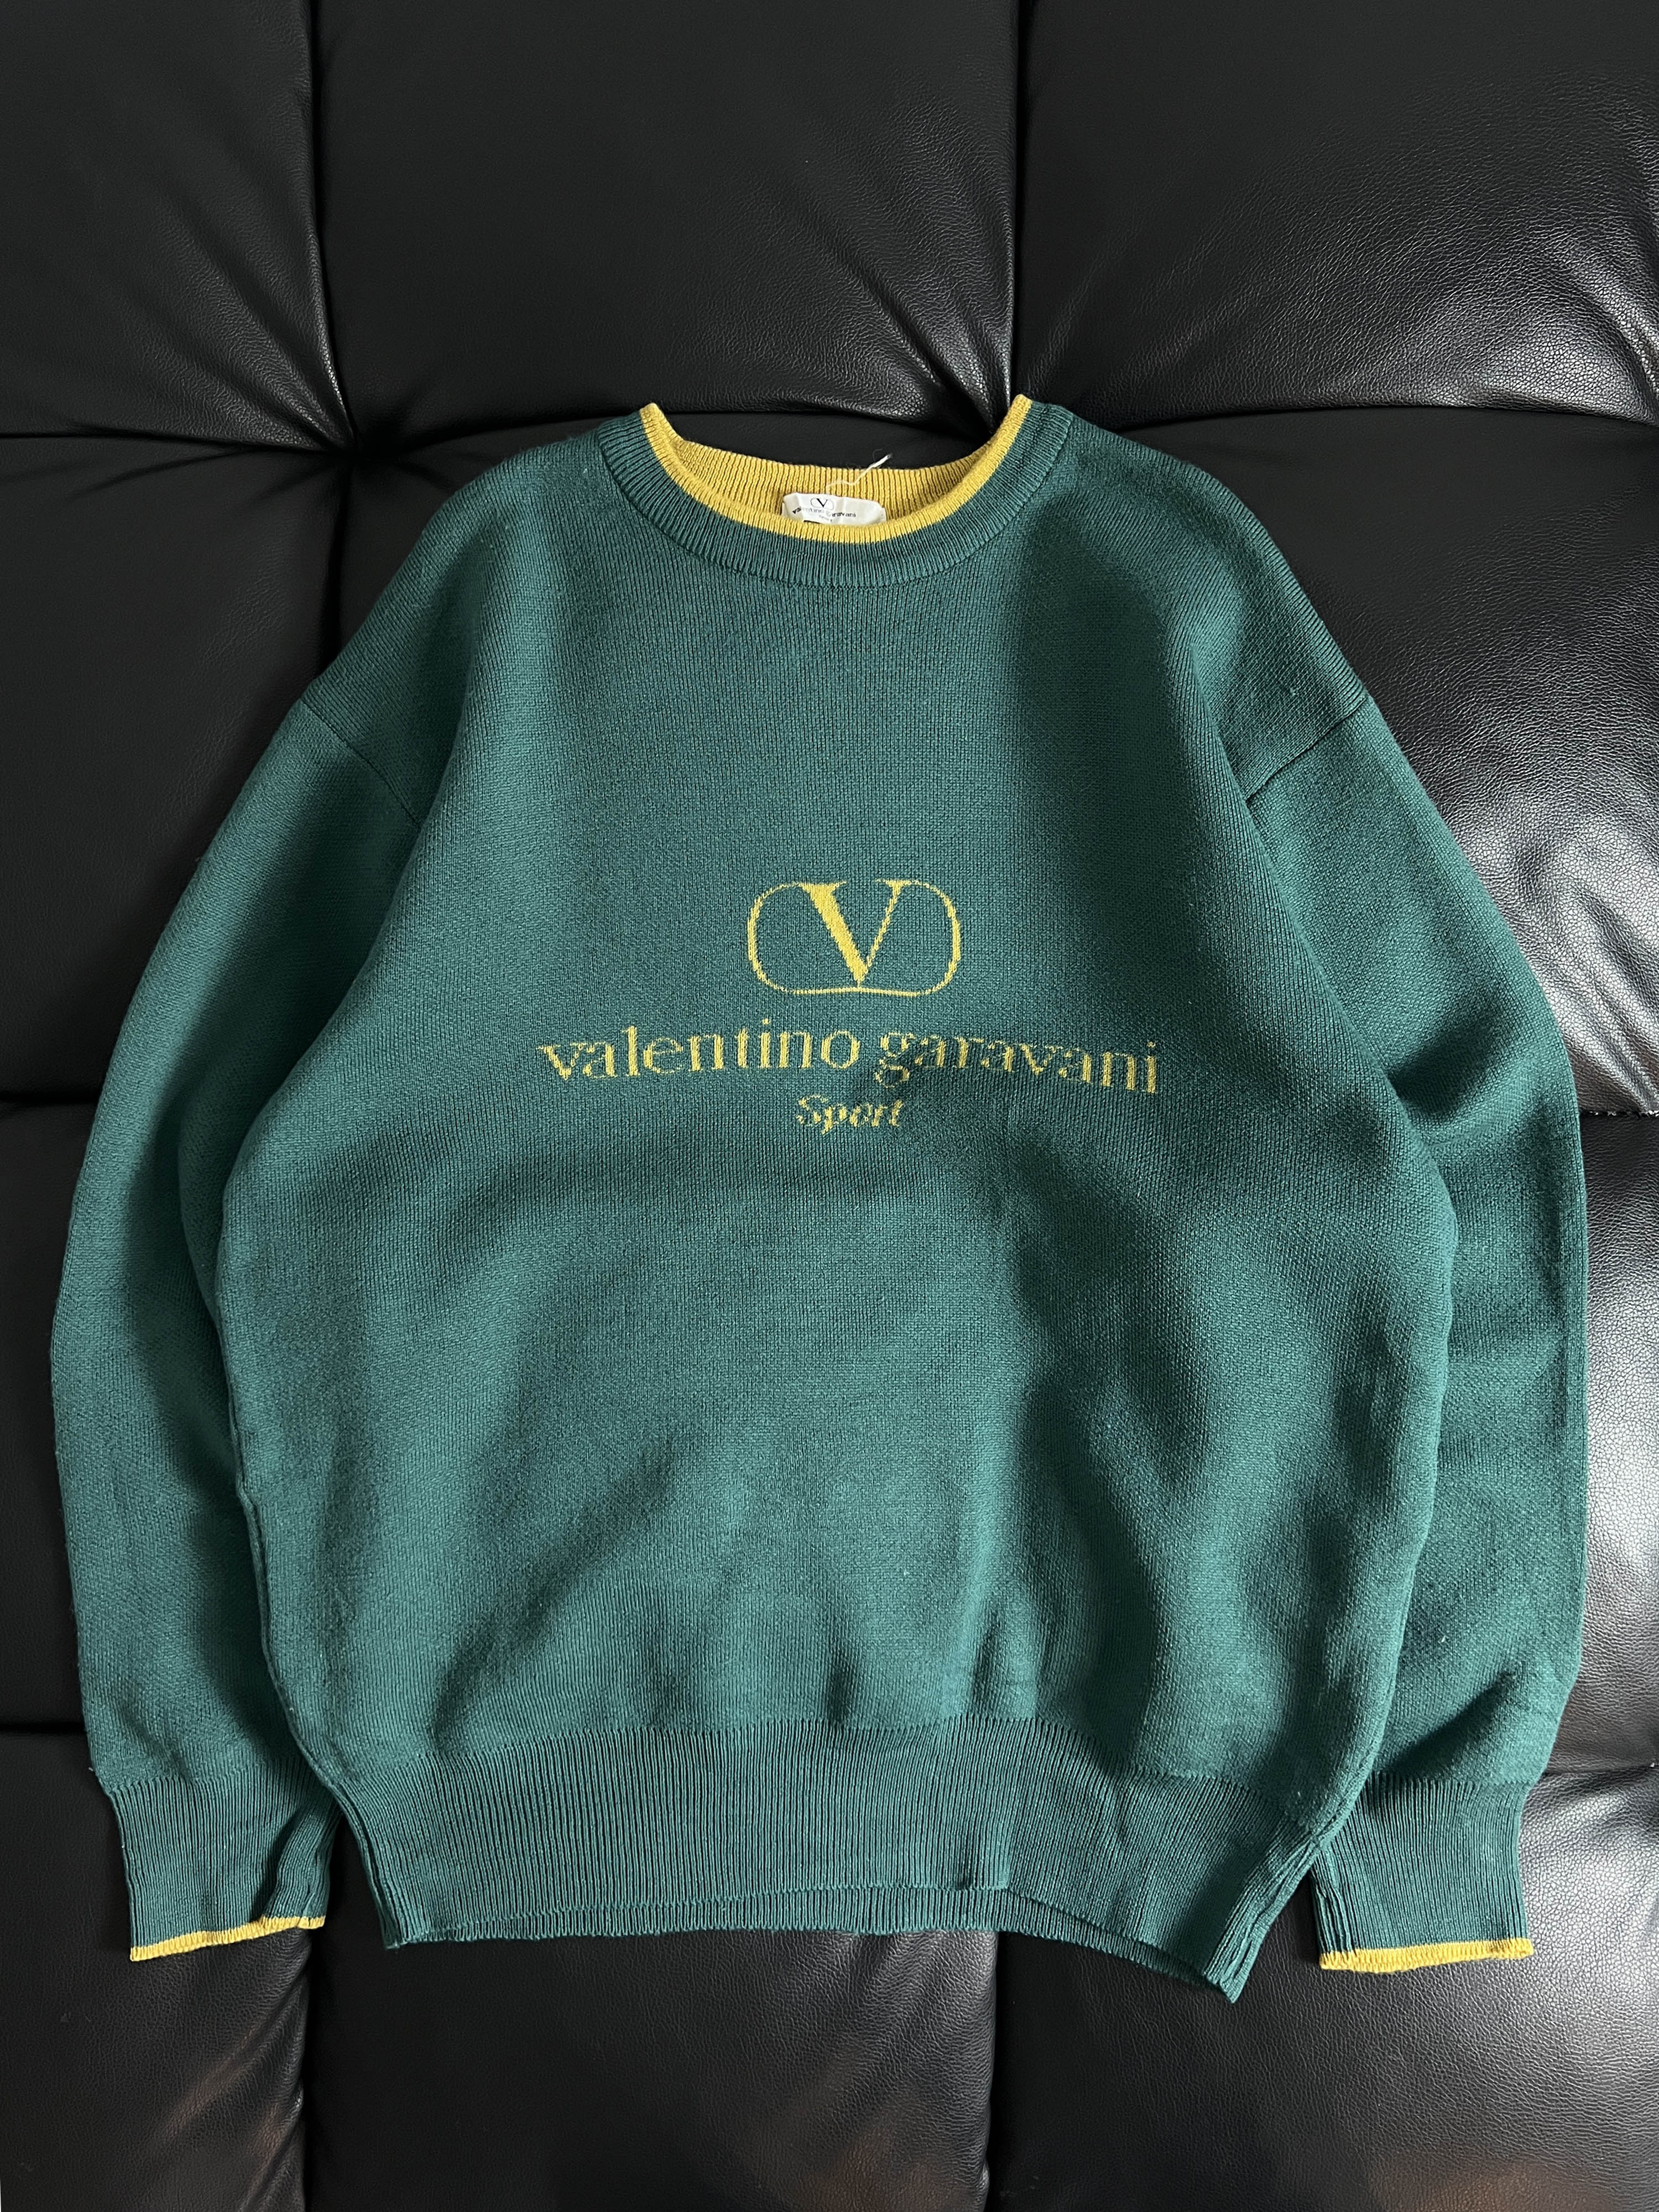 old valentino garavani sports logo knit